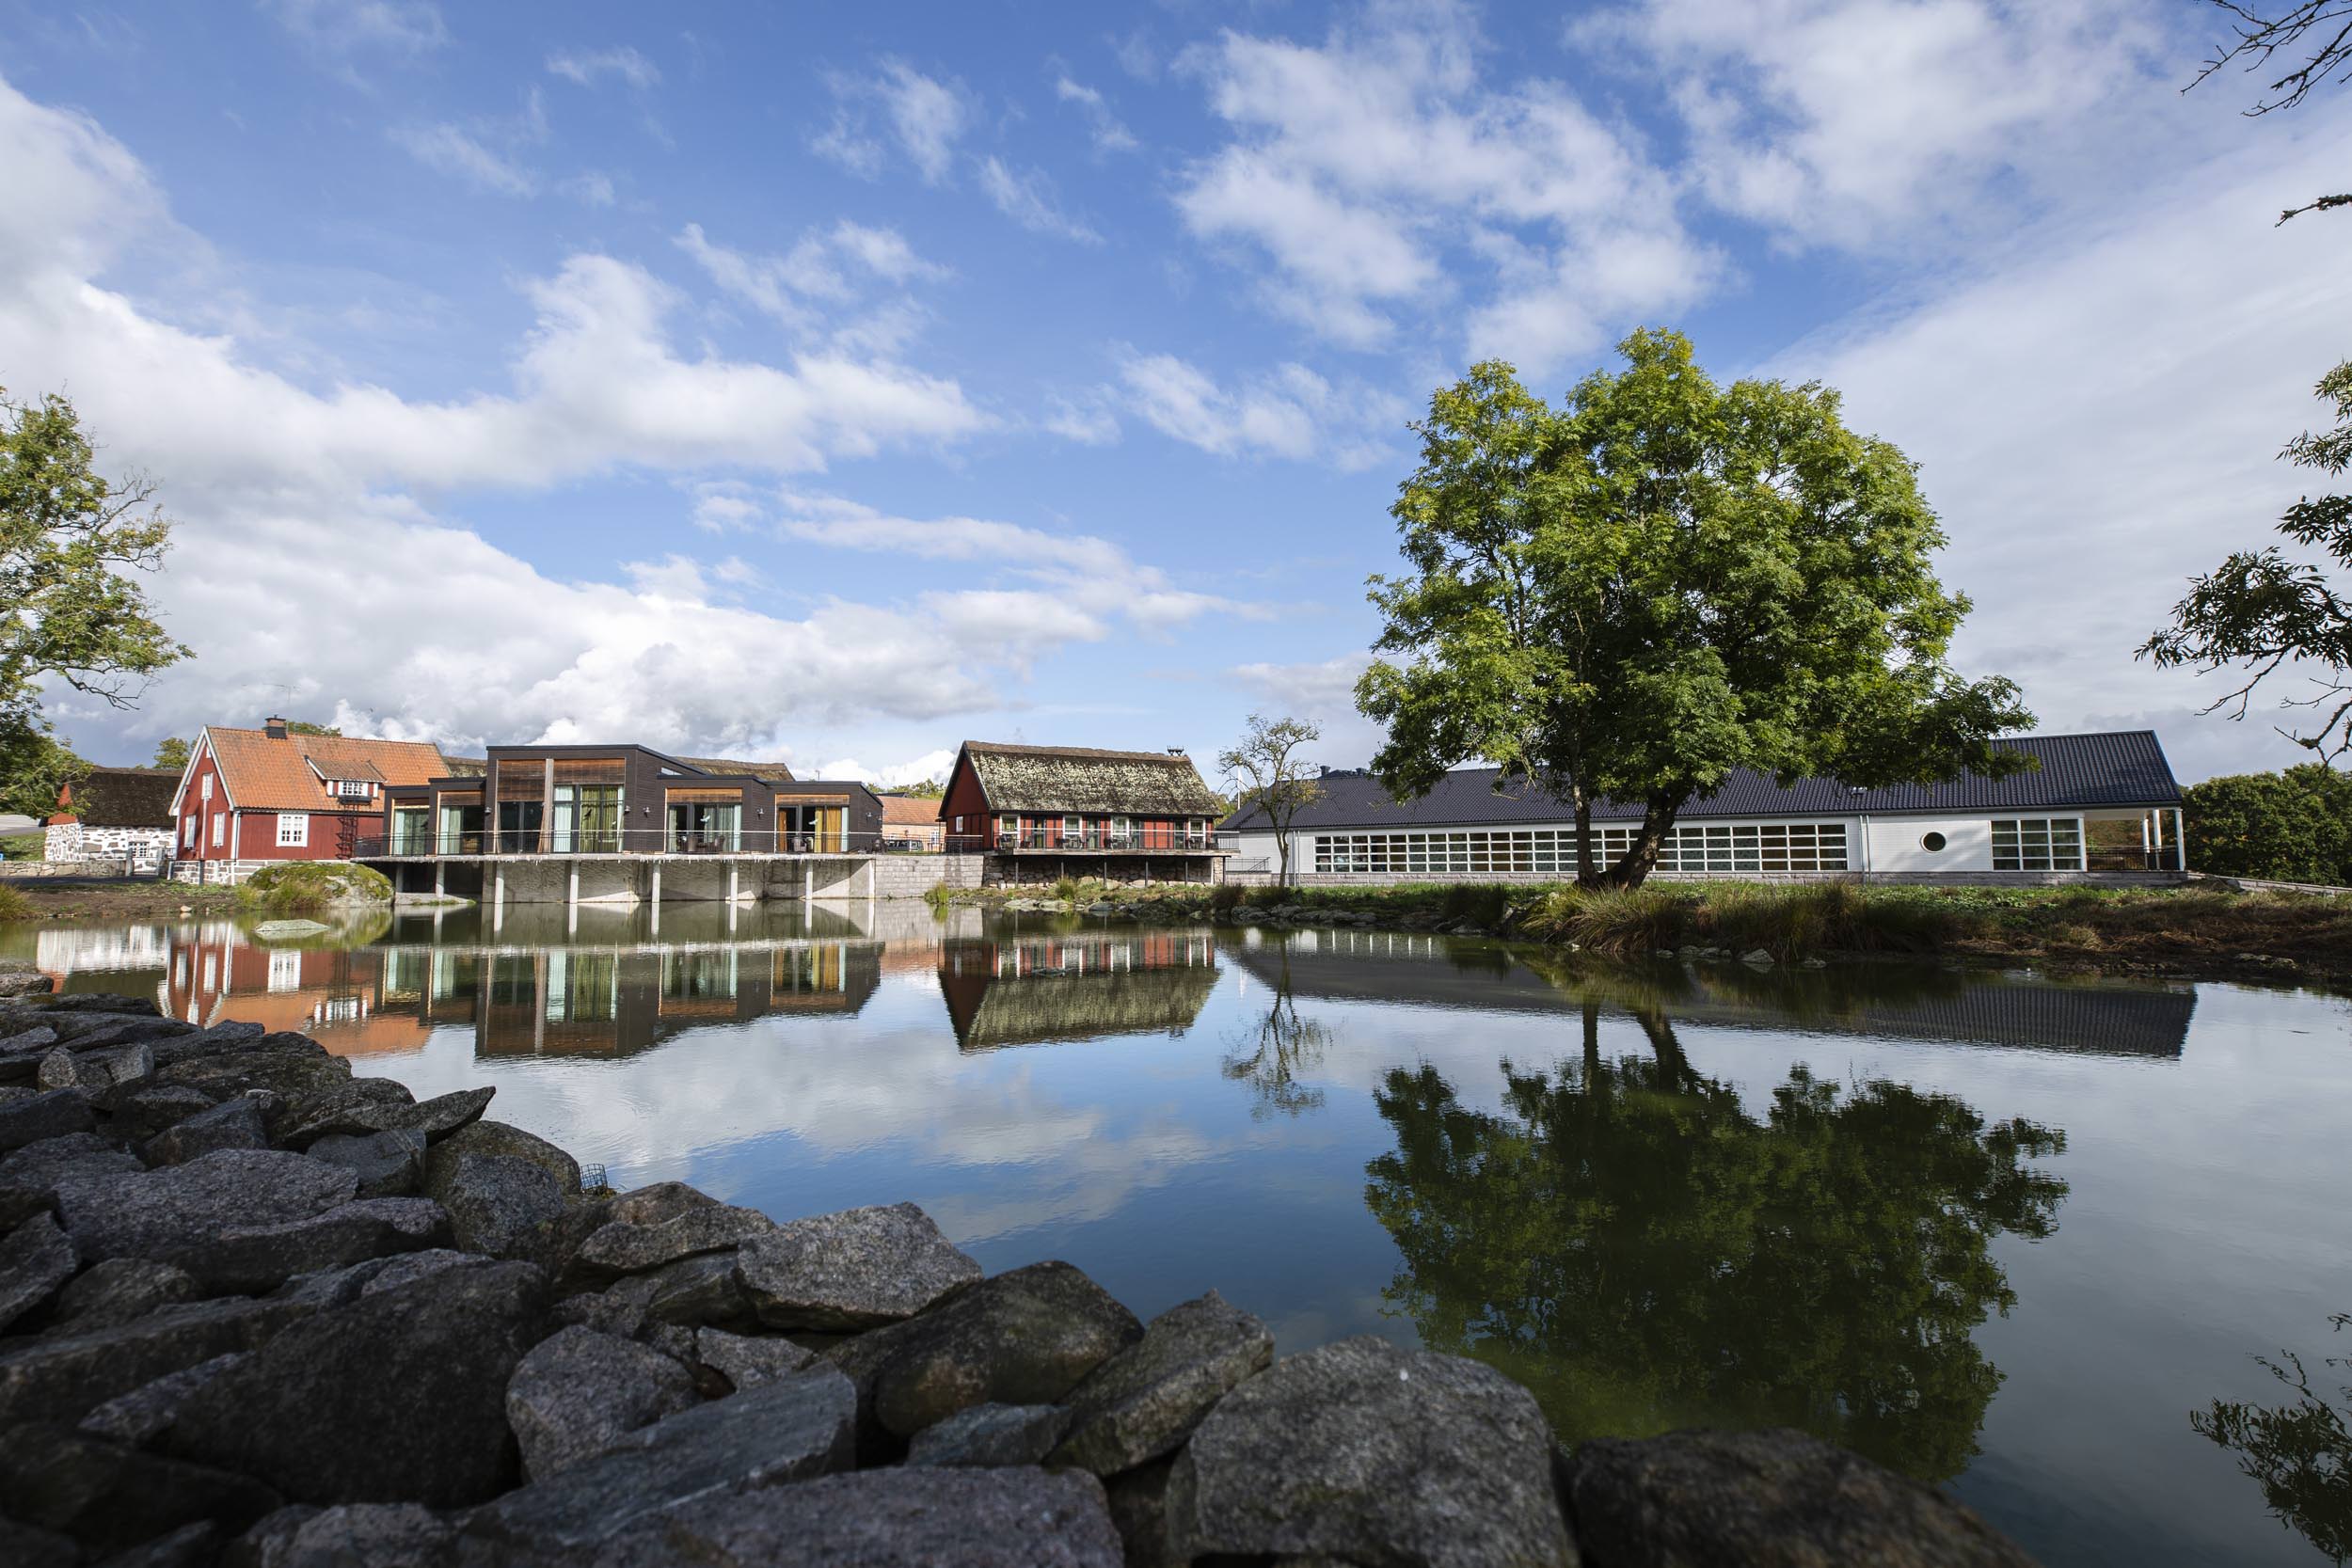 Eriksberg Hotel and Nature Reserve